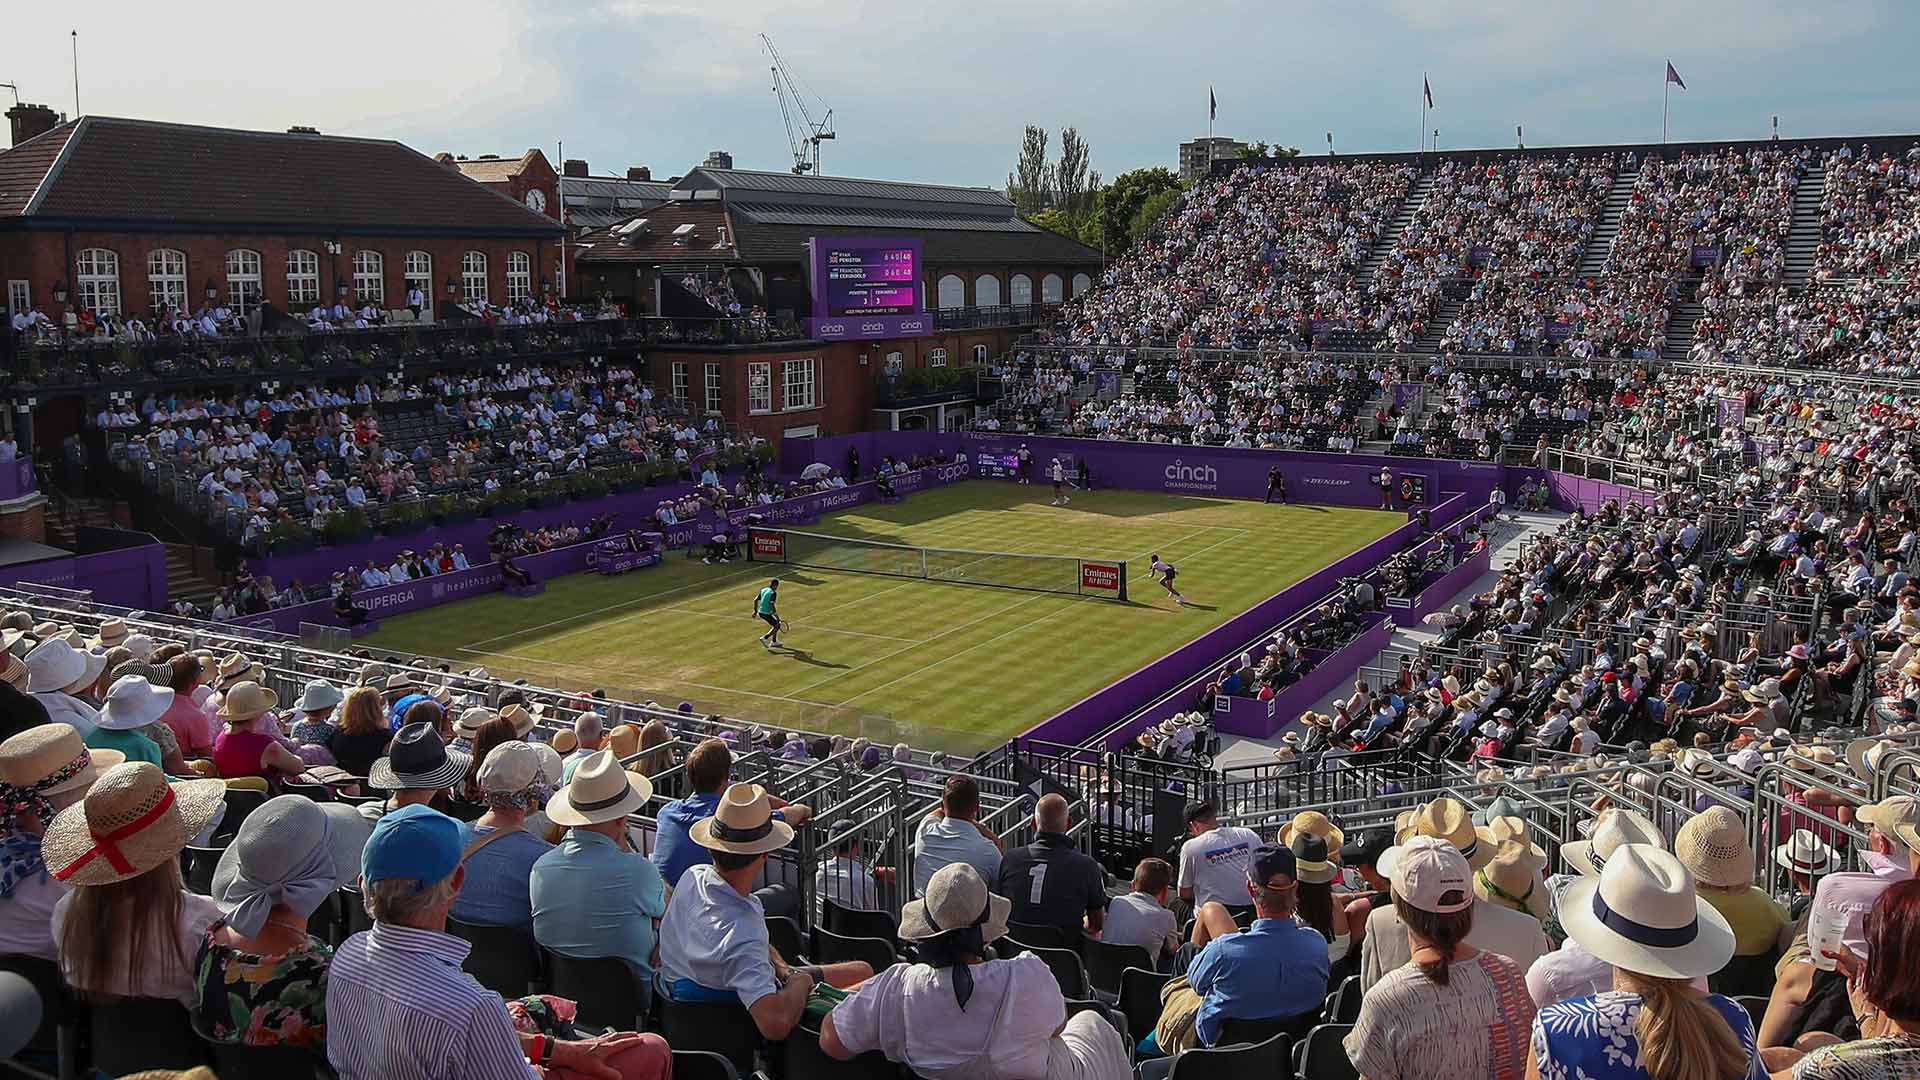 fort Dinkarville blok London / Queen's Club | Overview | ATP Tour | Tennis